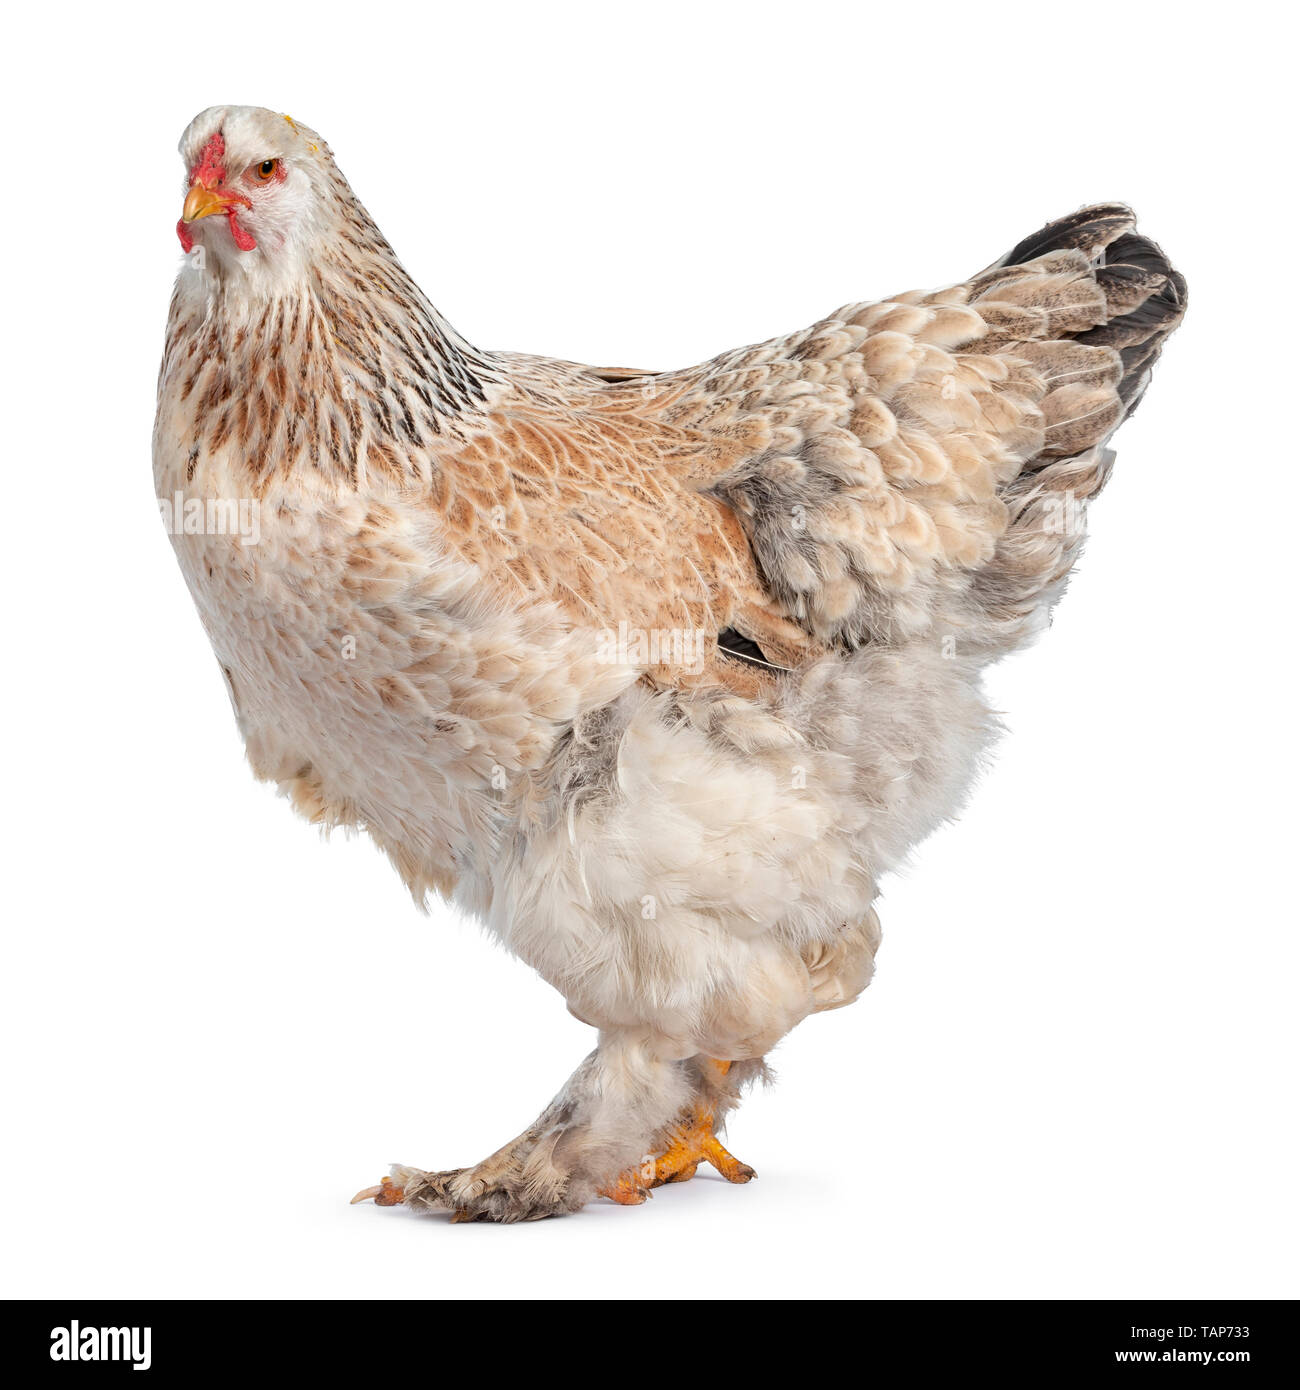 Brahma Chicken. Giant Brahma Global Most Popular Chicken. Stock Photo -  Image of breed, brahma: 220422468